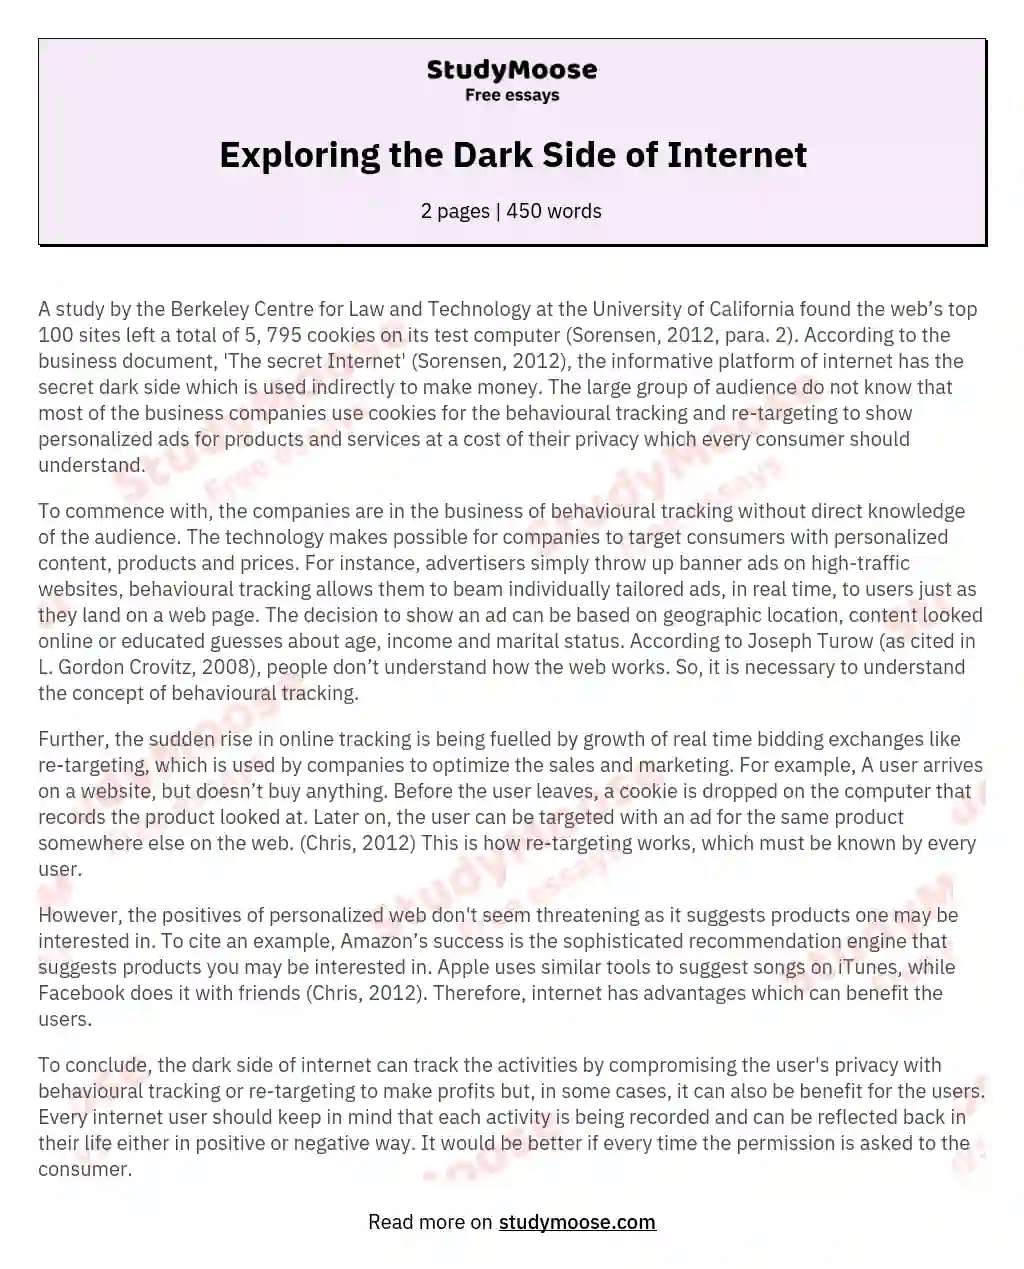 Exploring the Dark Side of Internet essay